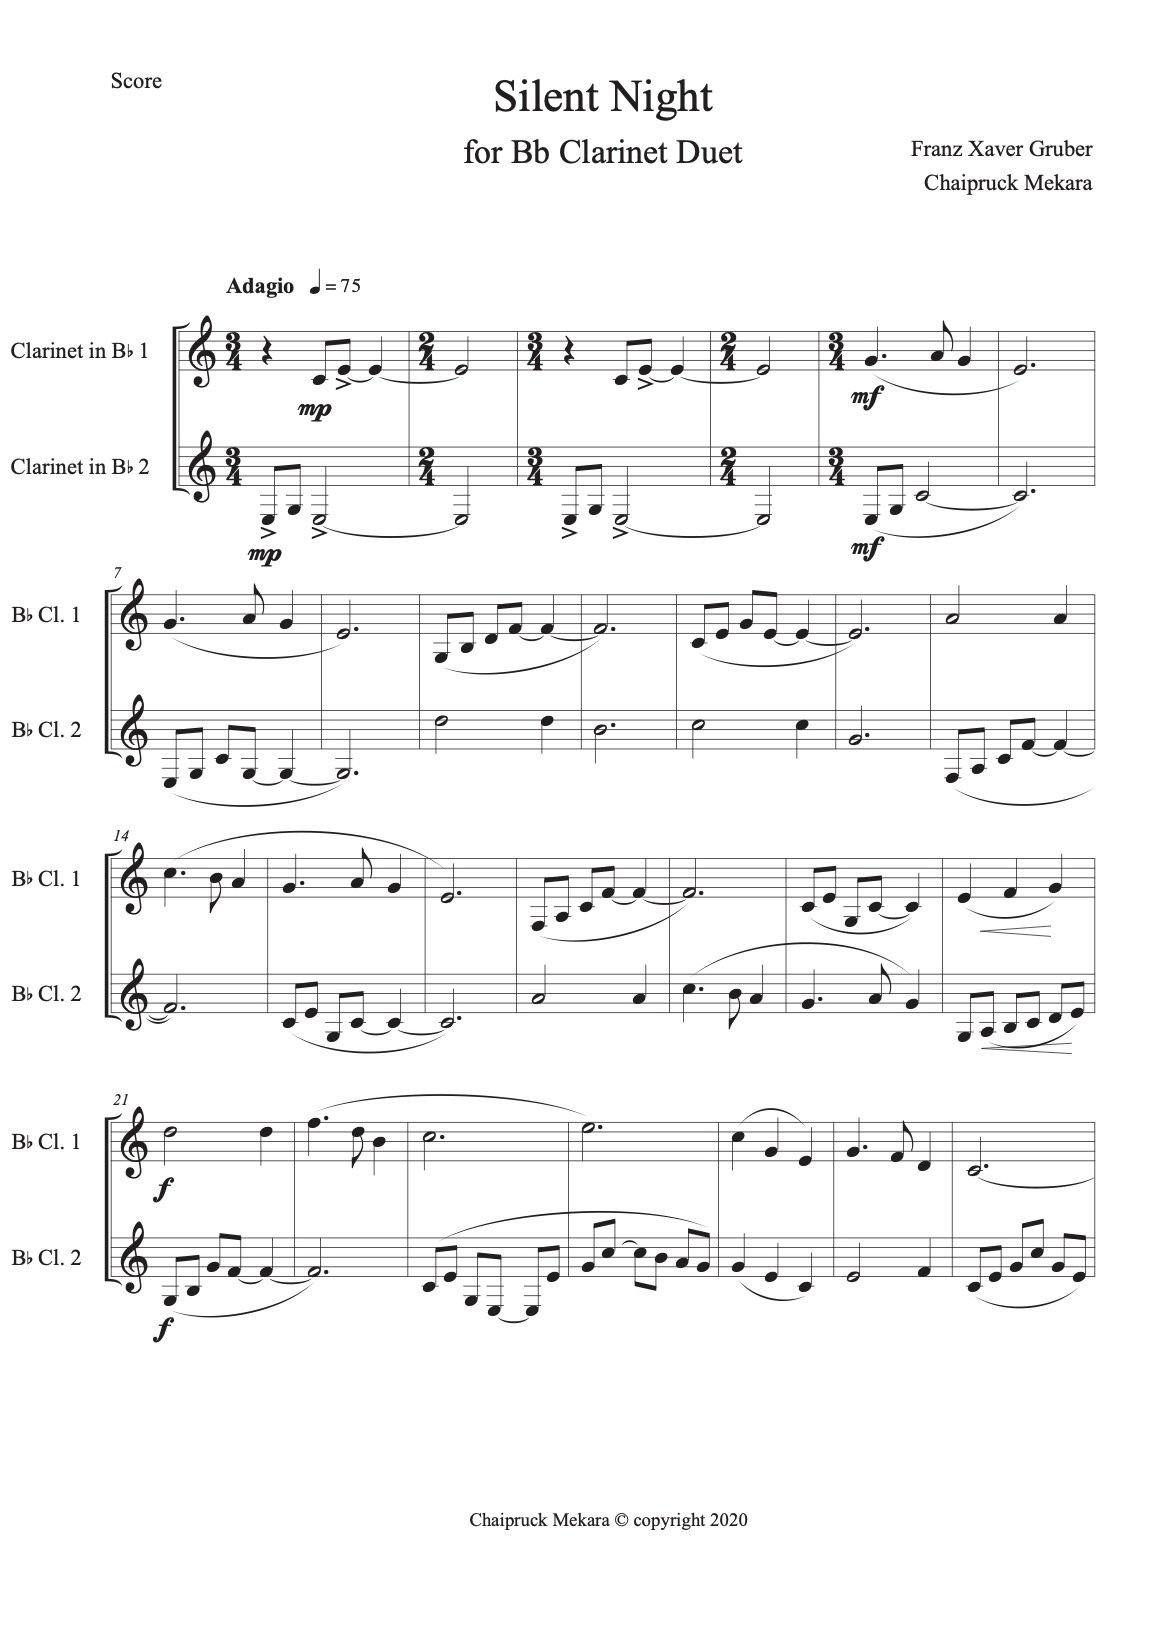 Audio Mp3 -  2nd Bb Clarinet part Silent Night - ChaipruckMekara